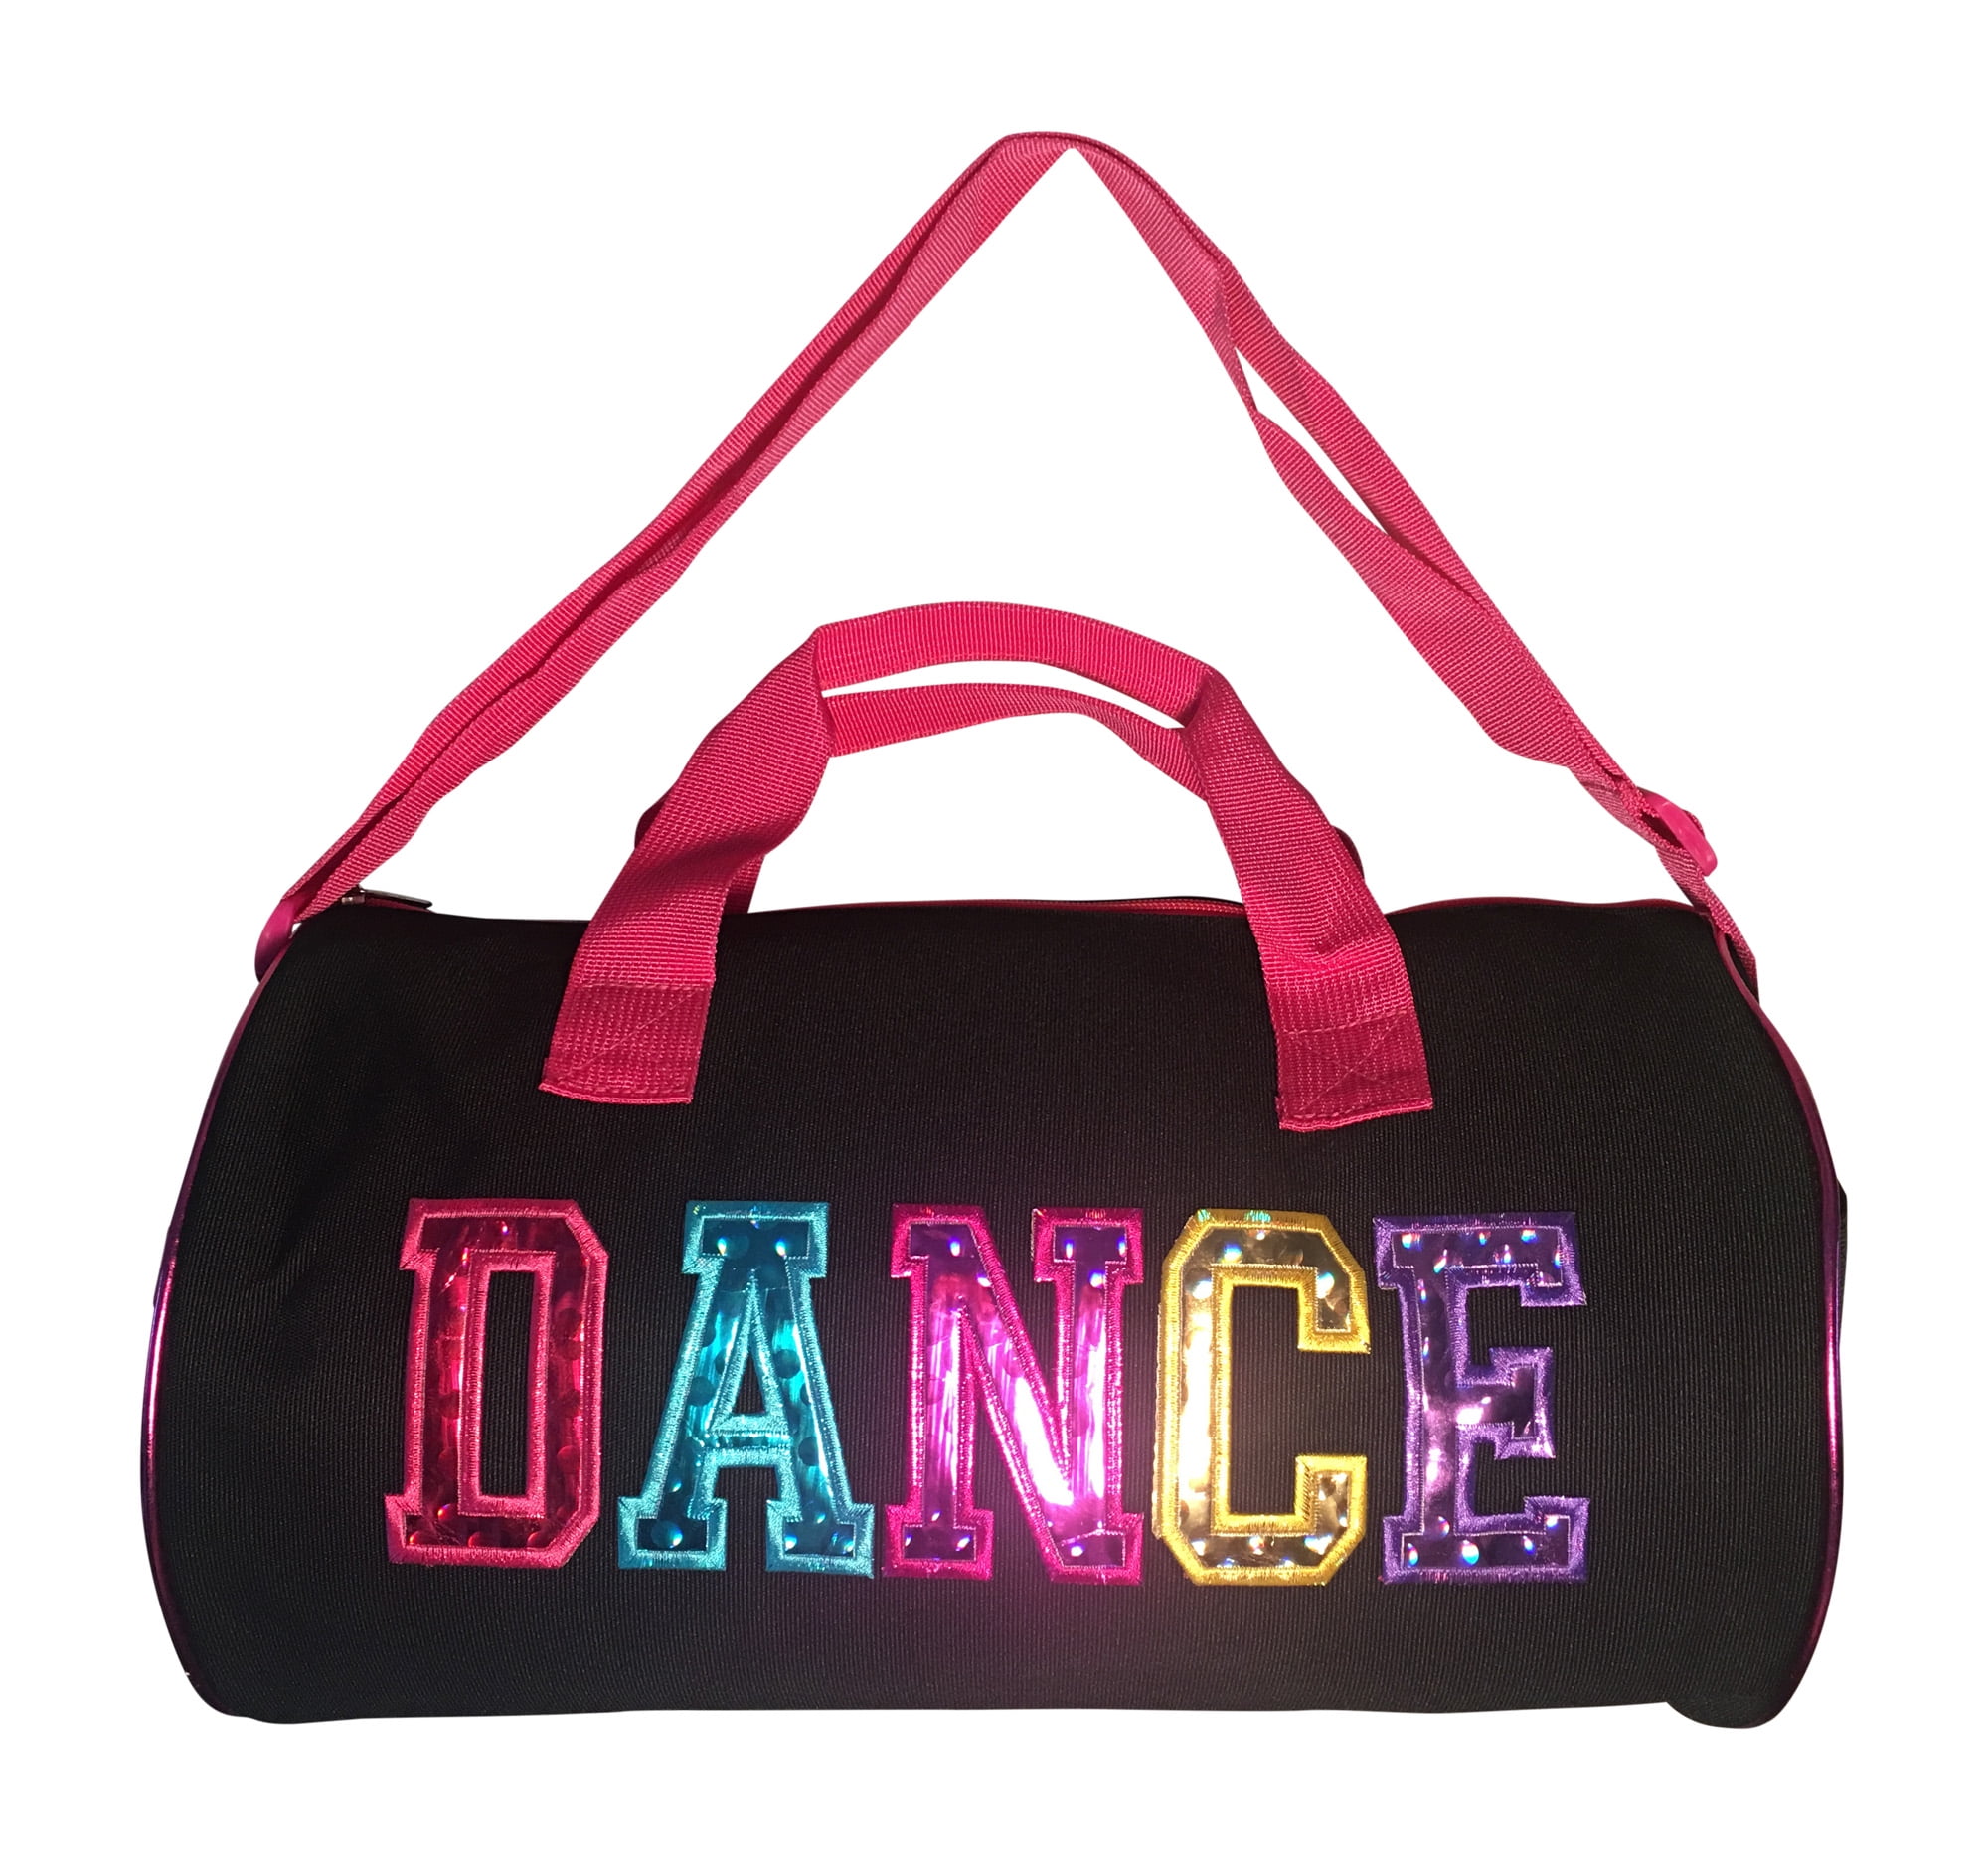 Dance Duffel Bag With Multicolored Dance Print - Walmart.com - Walmart.com